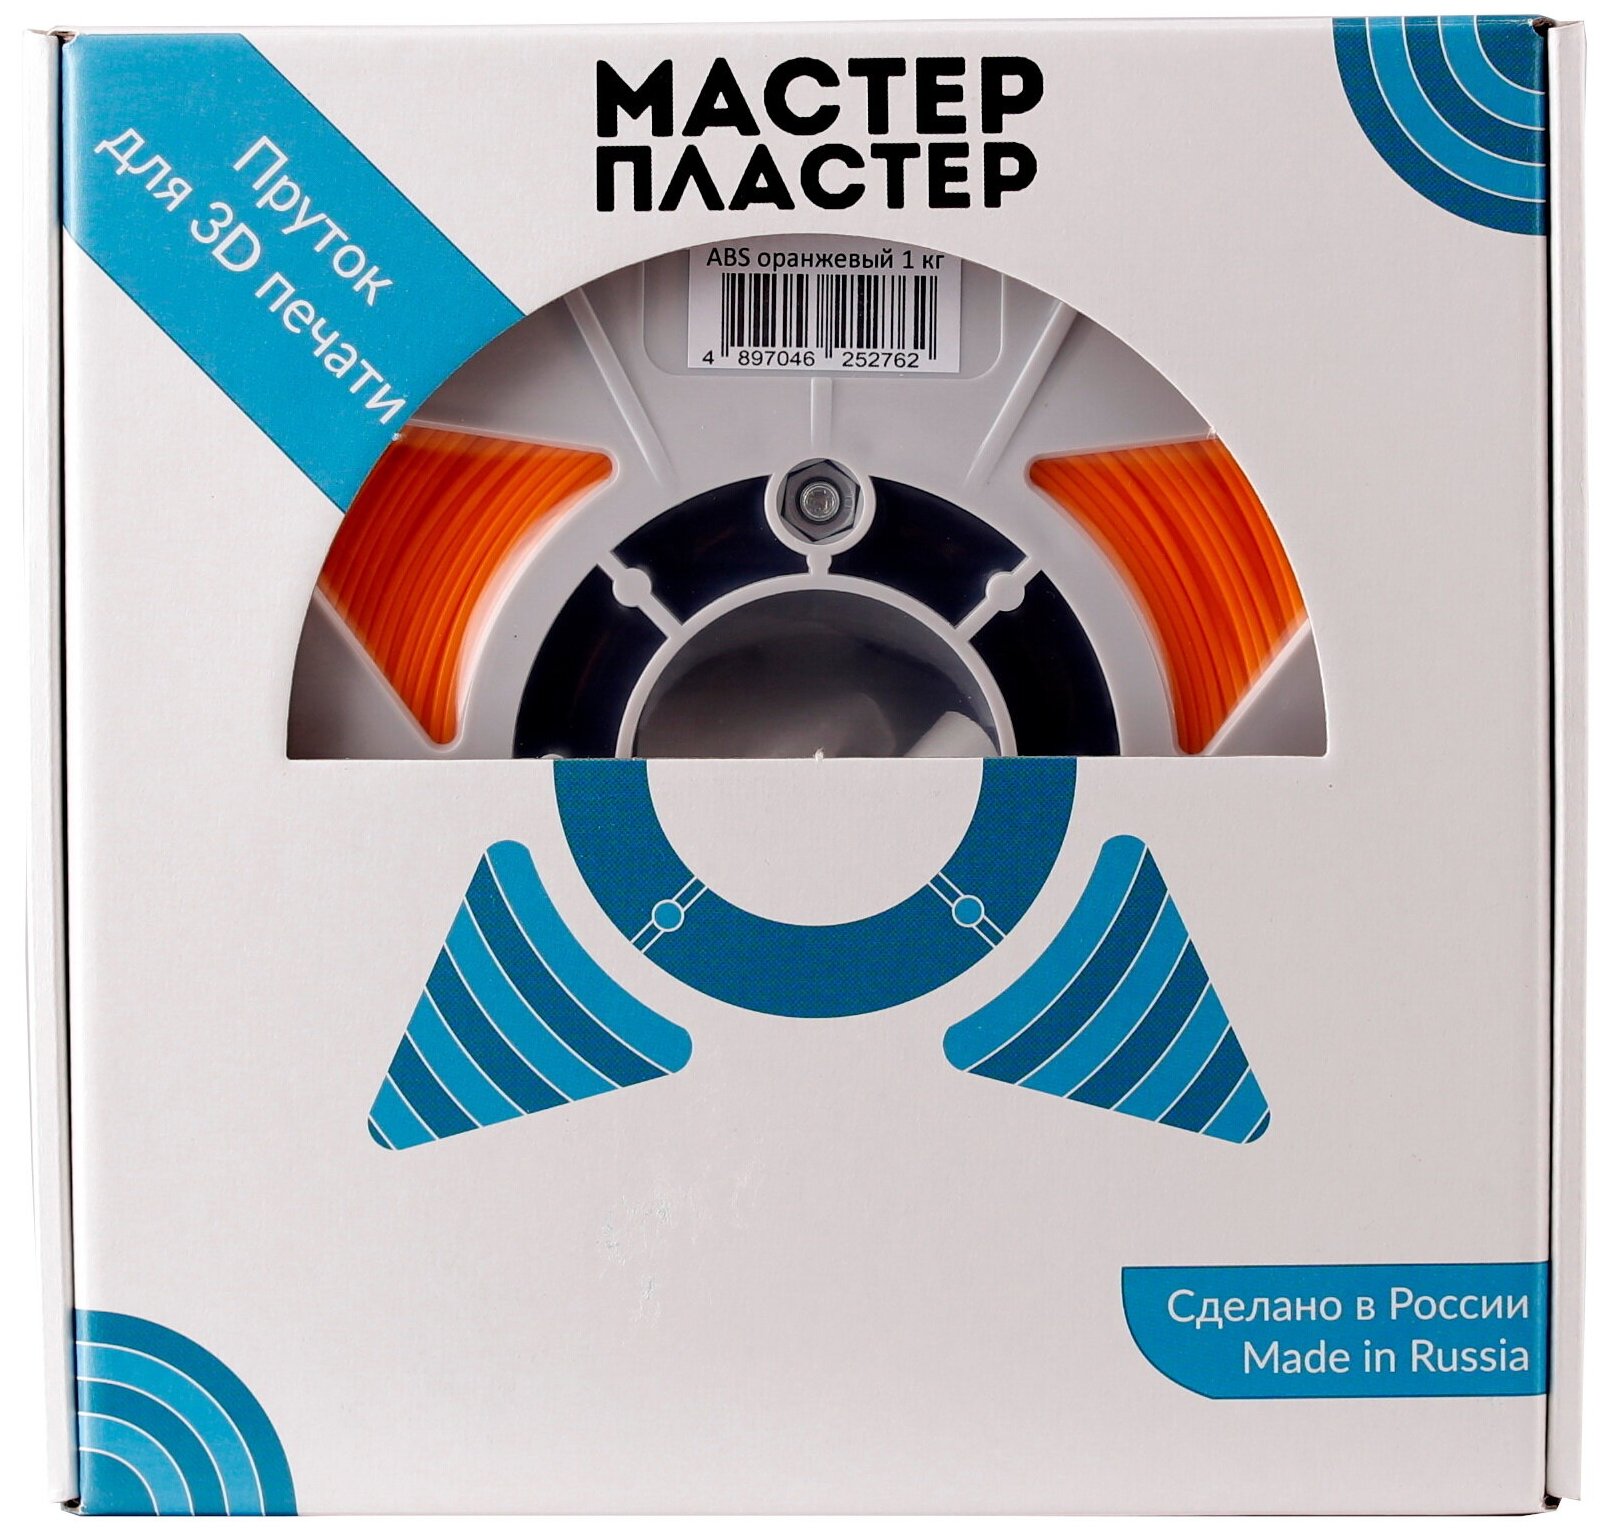 Пластик для 3D принтера Мастер Пластер ABS оранжевый 1,75 мм катушка 1 кг